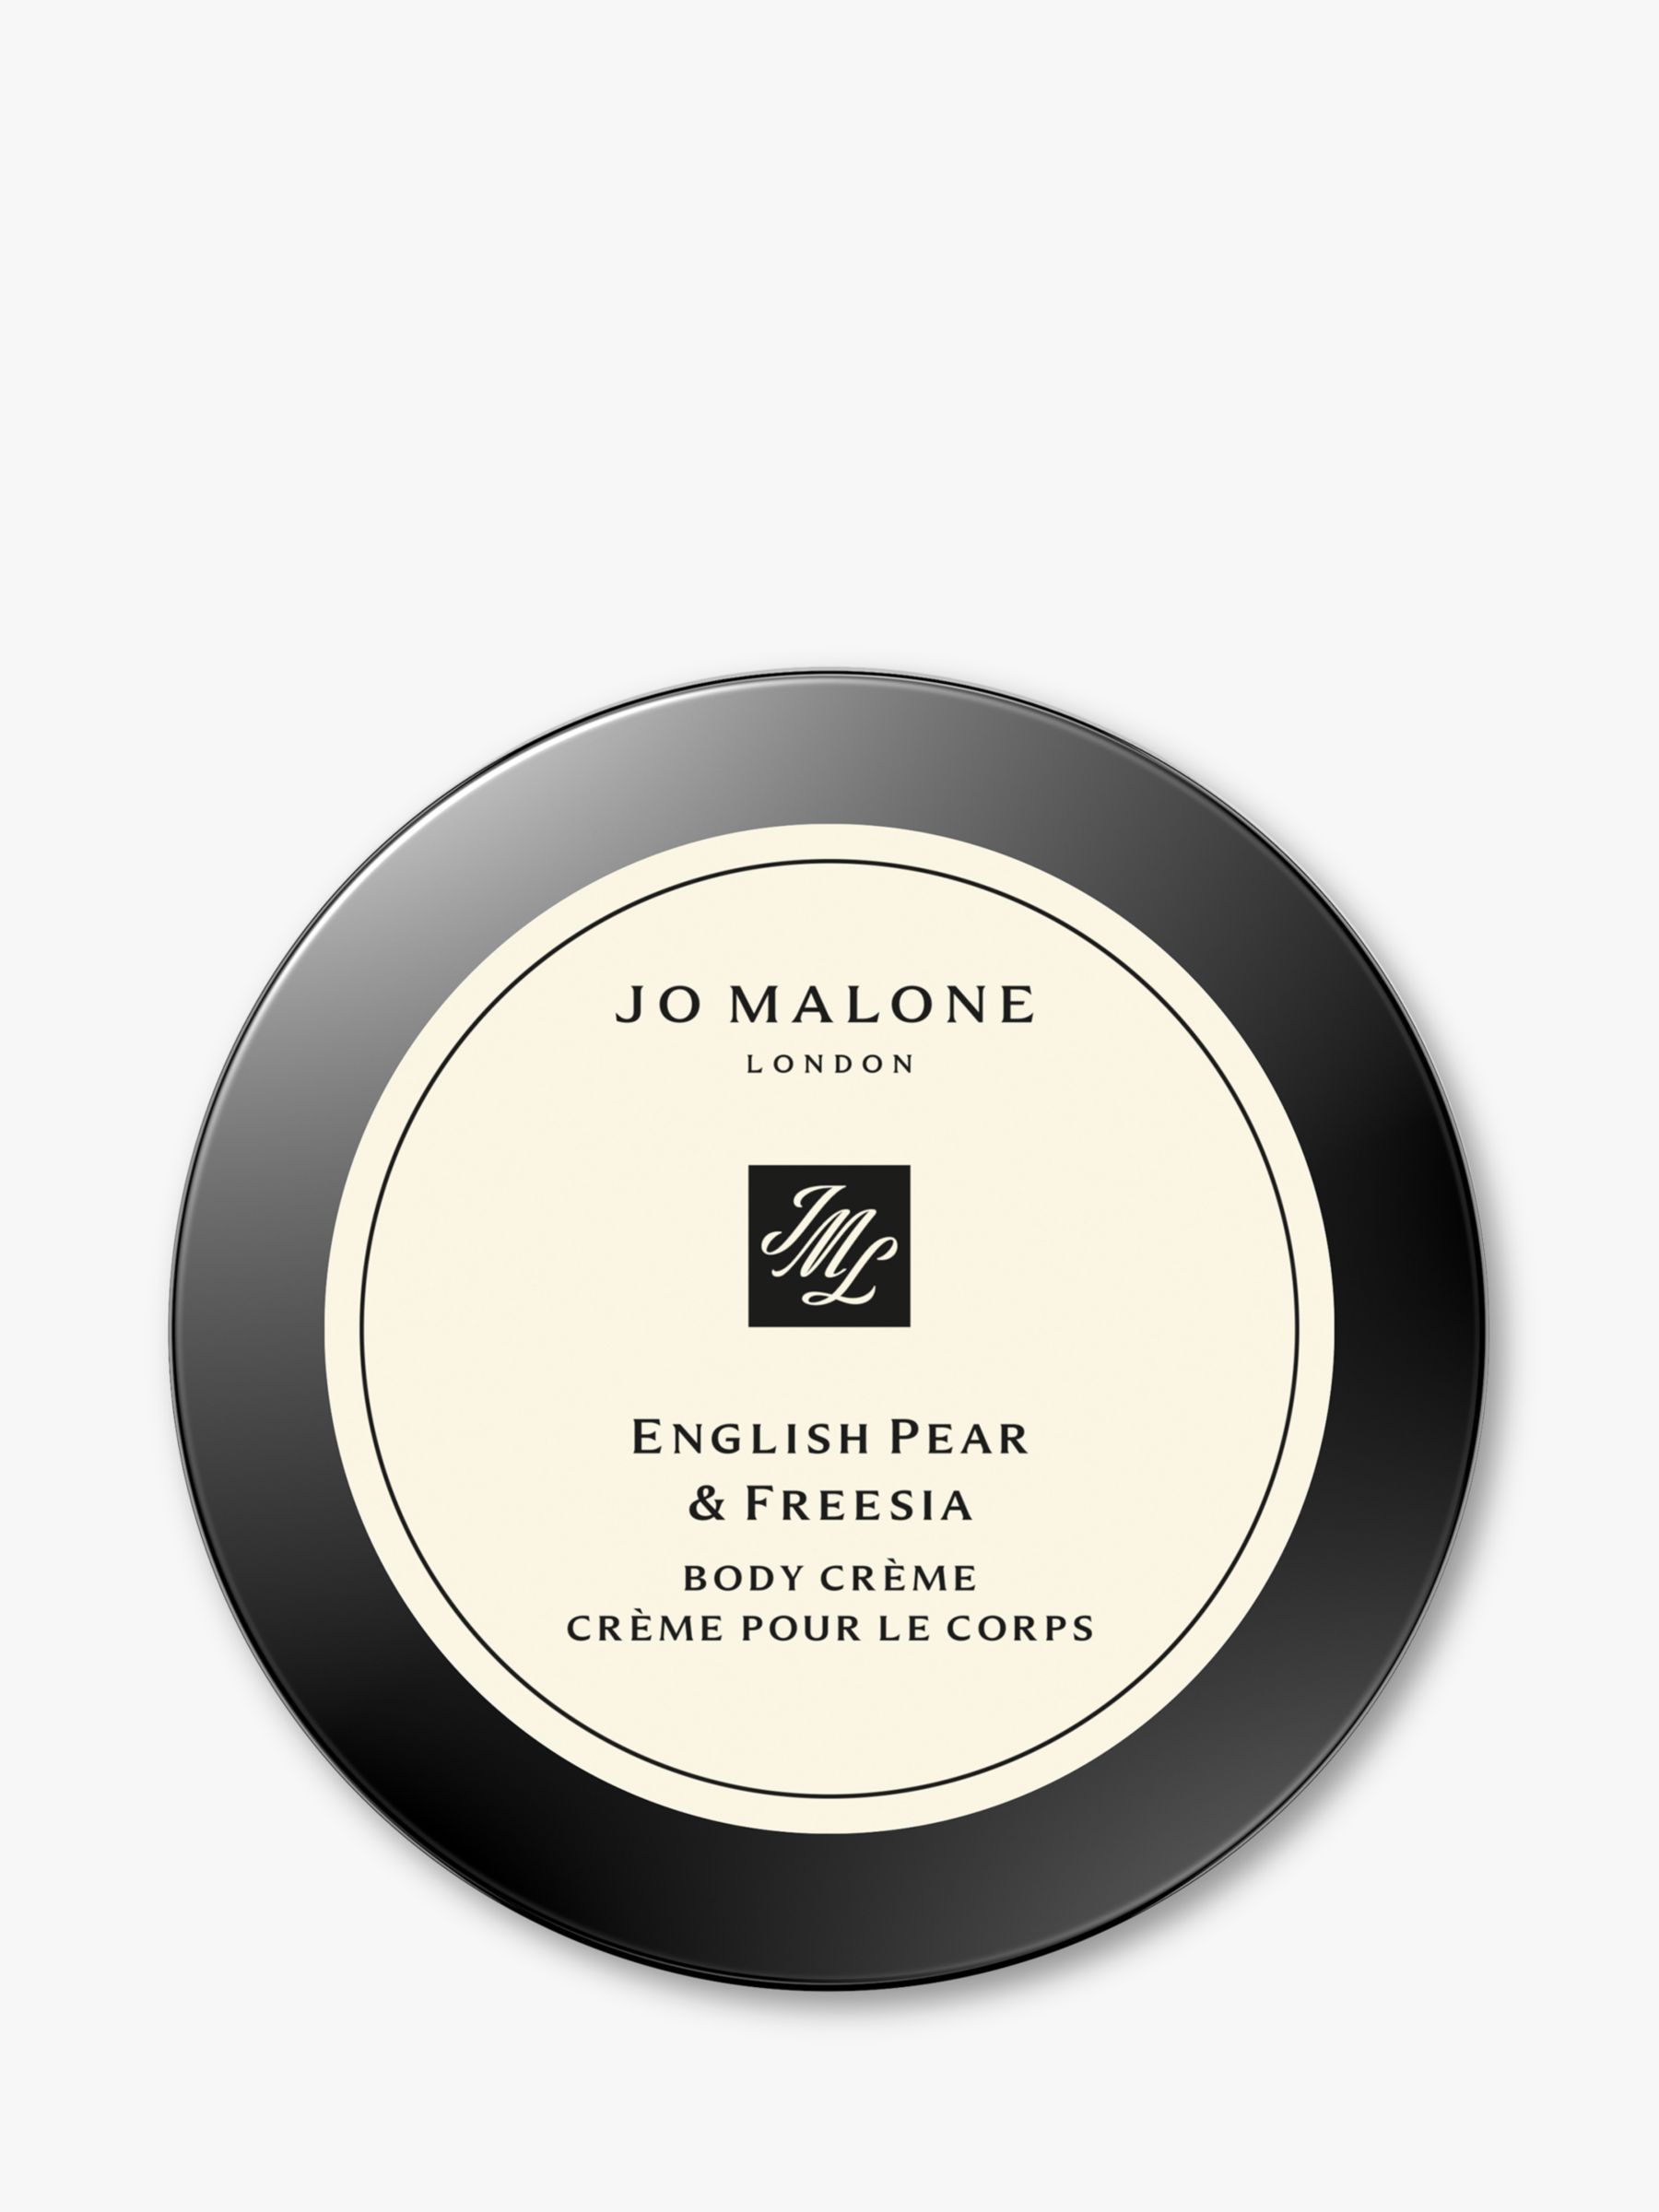 Jo Malone London English Pear & Freesia Body Crème, 50ml